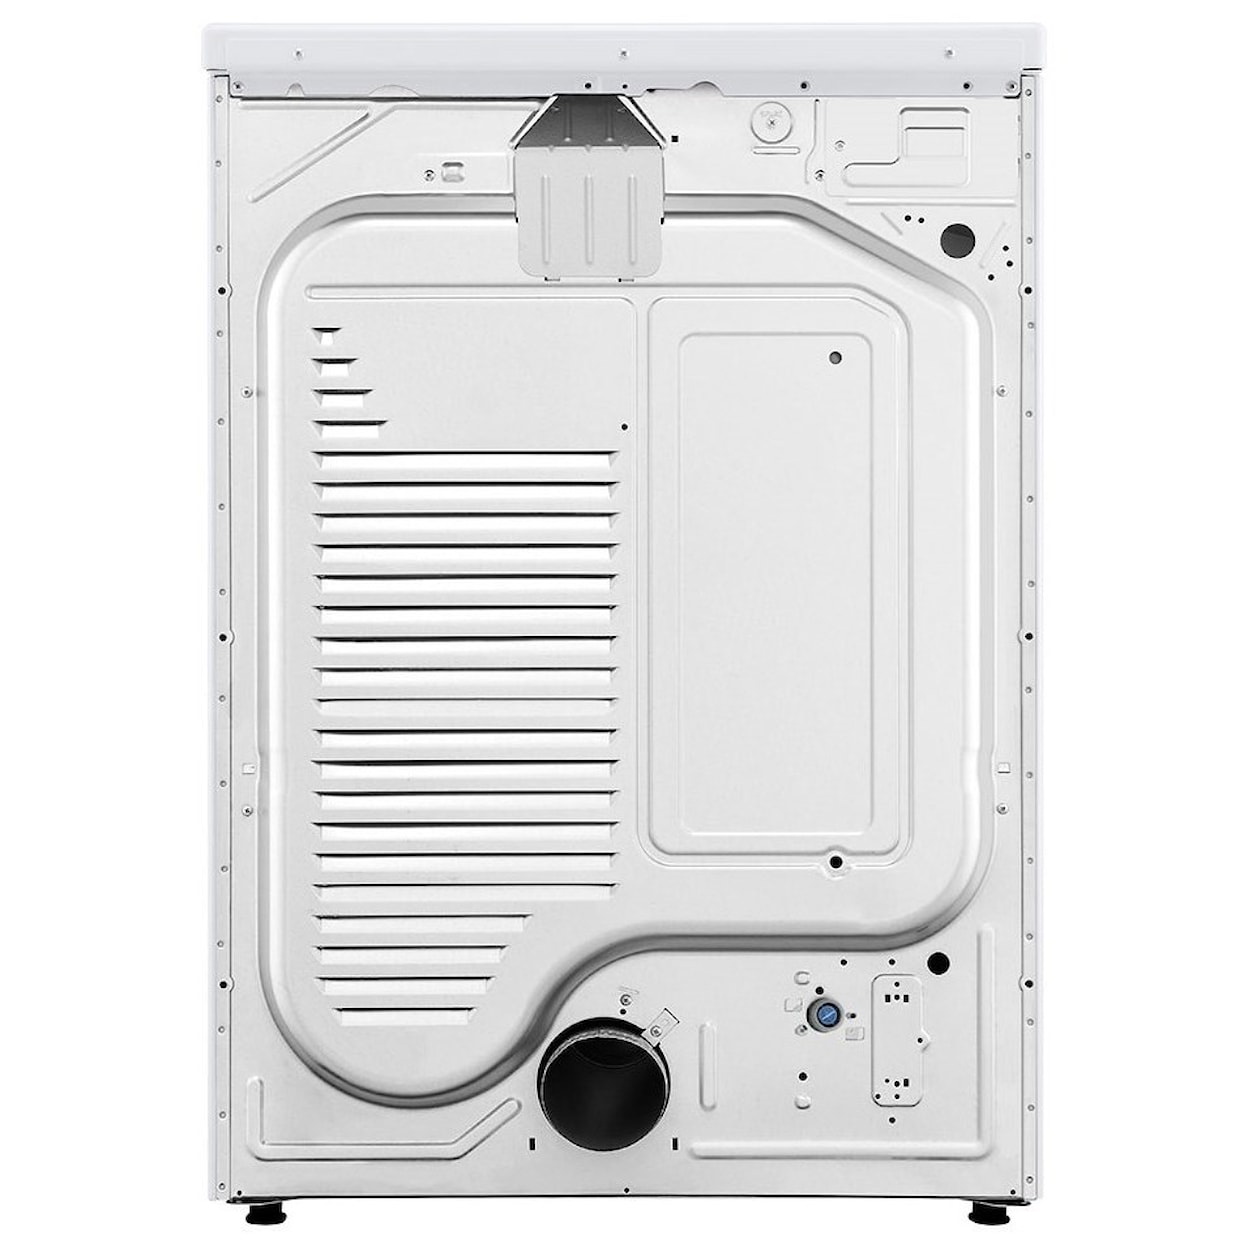 LG Appliances Dryers 7.4 cu. ft. Smart Front Load Electric Dryer